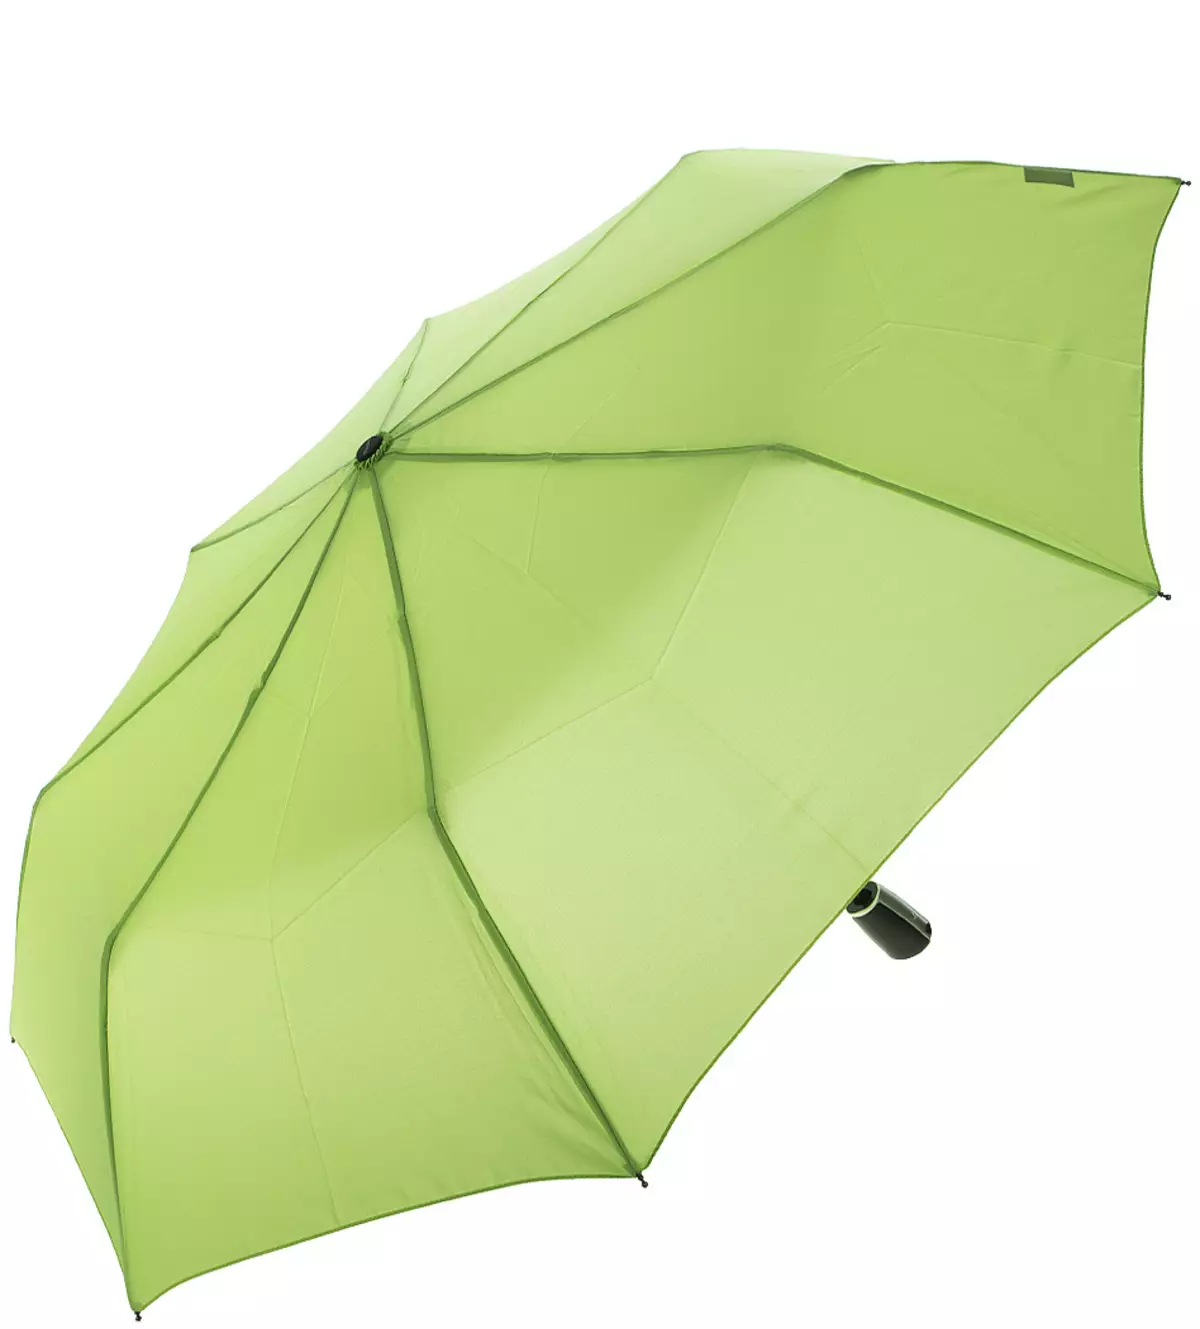 Doppler umbrellas (60 Ata): Tamaitai Faataitaiga Cane ma gagau, Dopler Iloiloga 15227_17